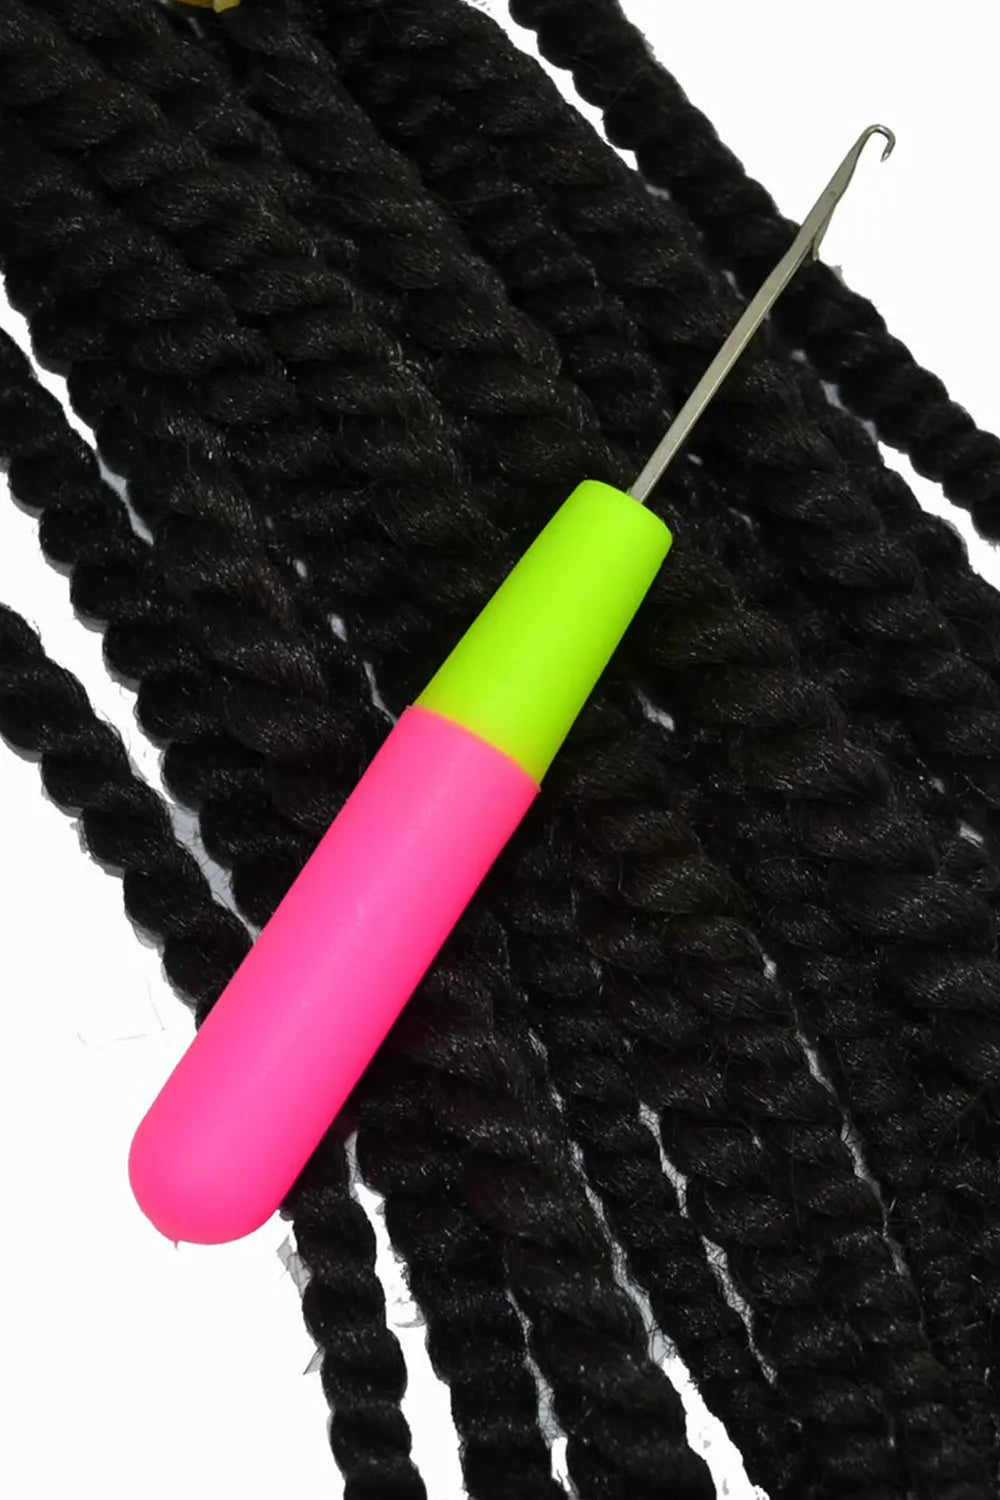 12pcs I TYPE Weaving Needle Hook /Sewing Needles For Human Hair